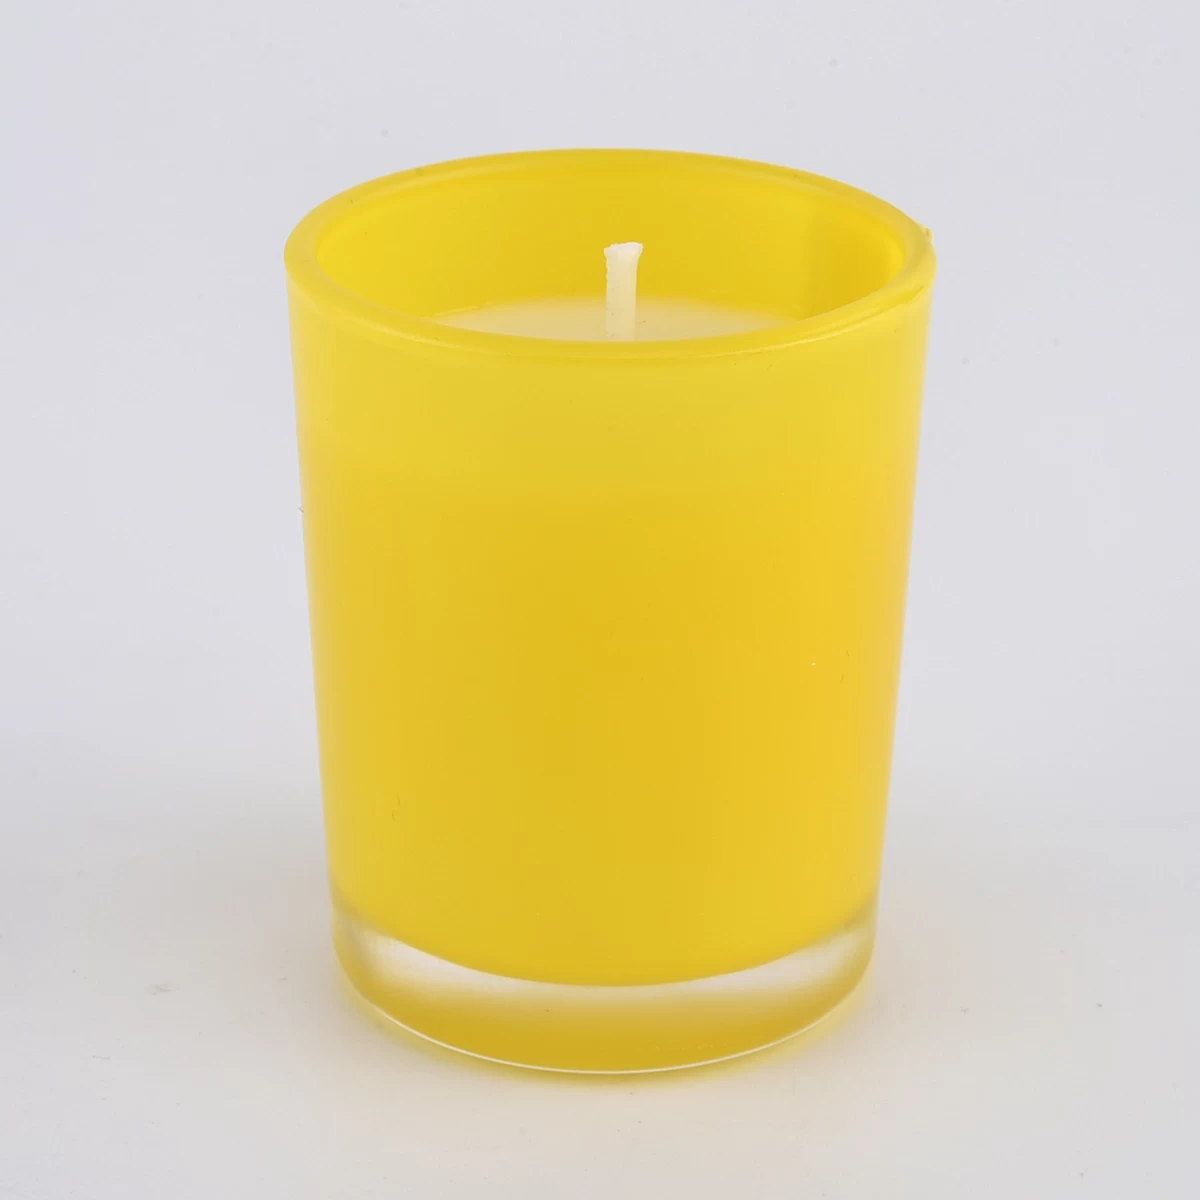 transparent colored glass candle vessels 8 oz